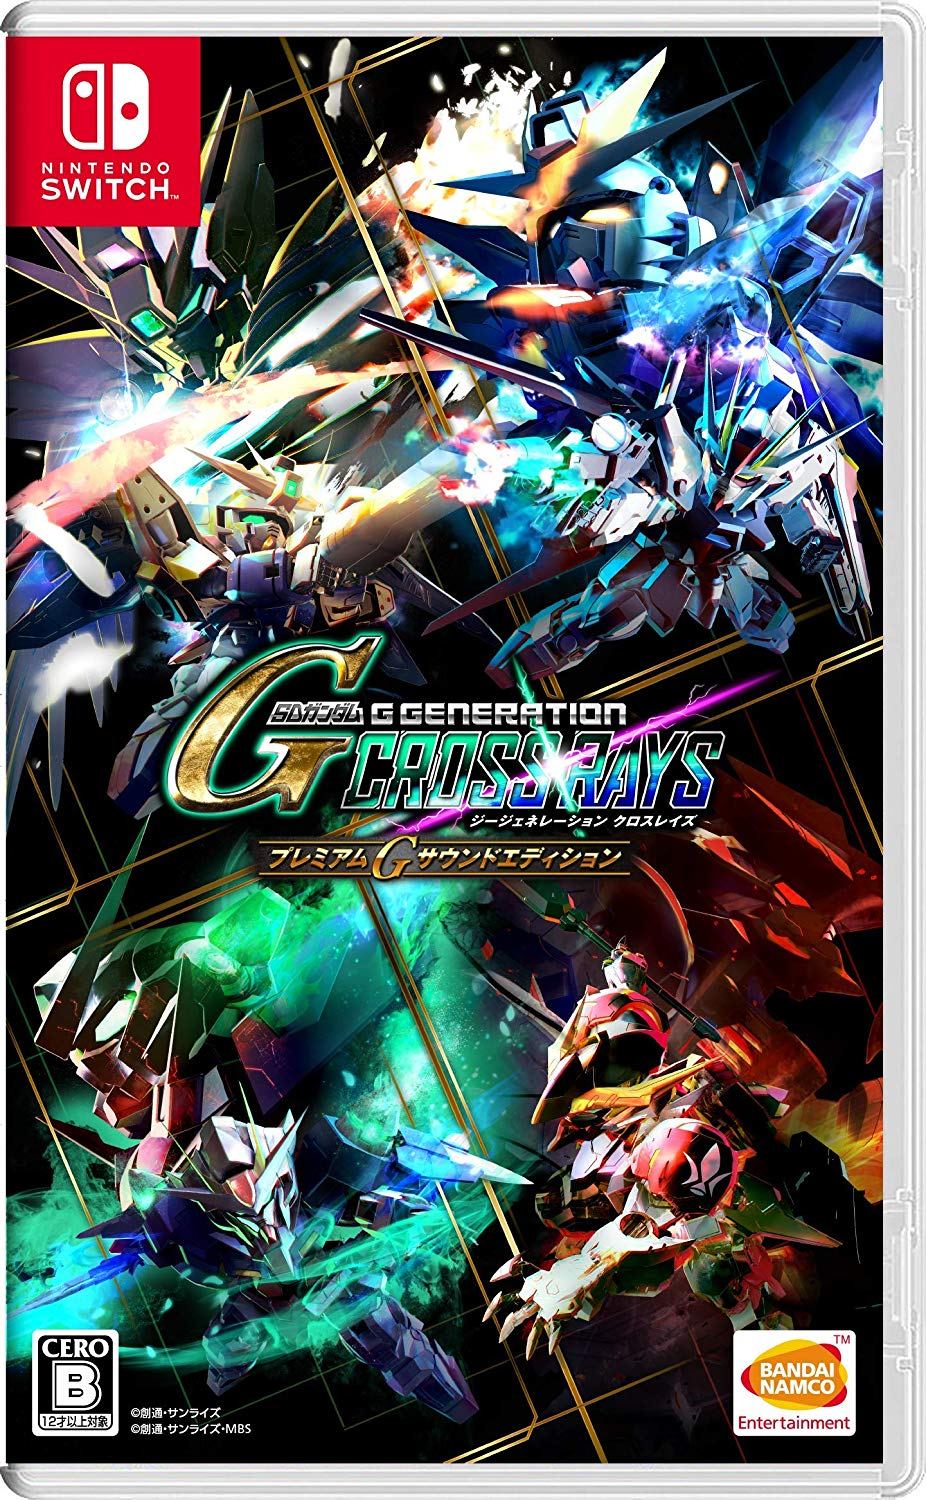 Sd Gundam G Generation Cross Rays Premium G Sound Edition Multi Language